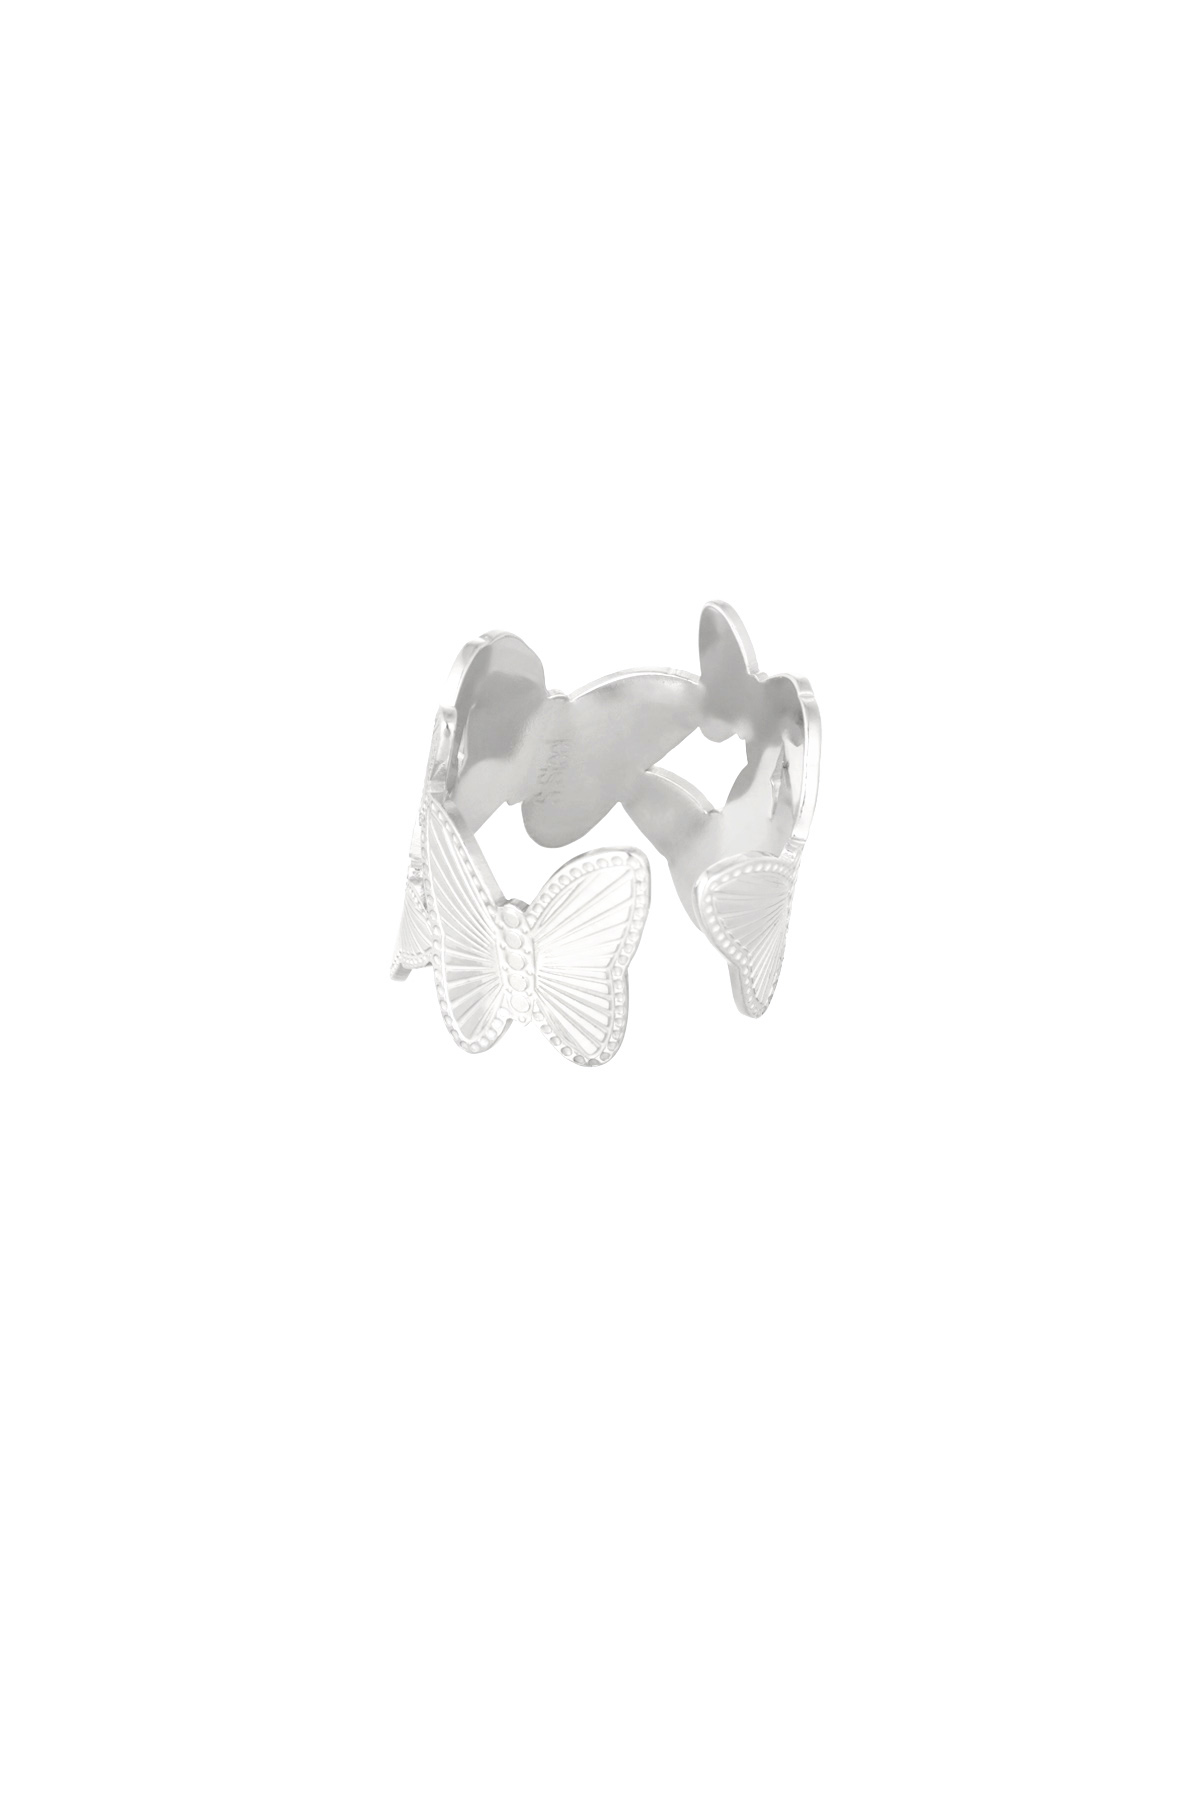 Ring vlinders groot- Zilver h5 Afbeelding2